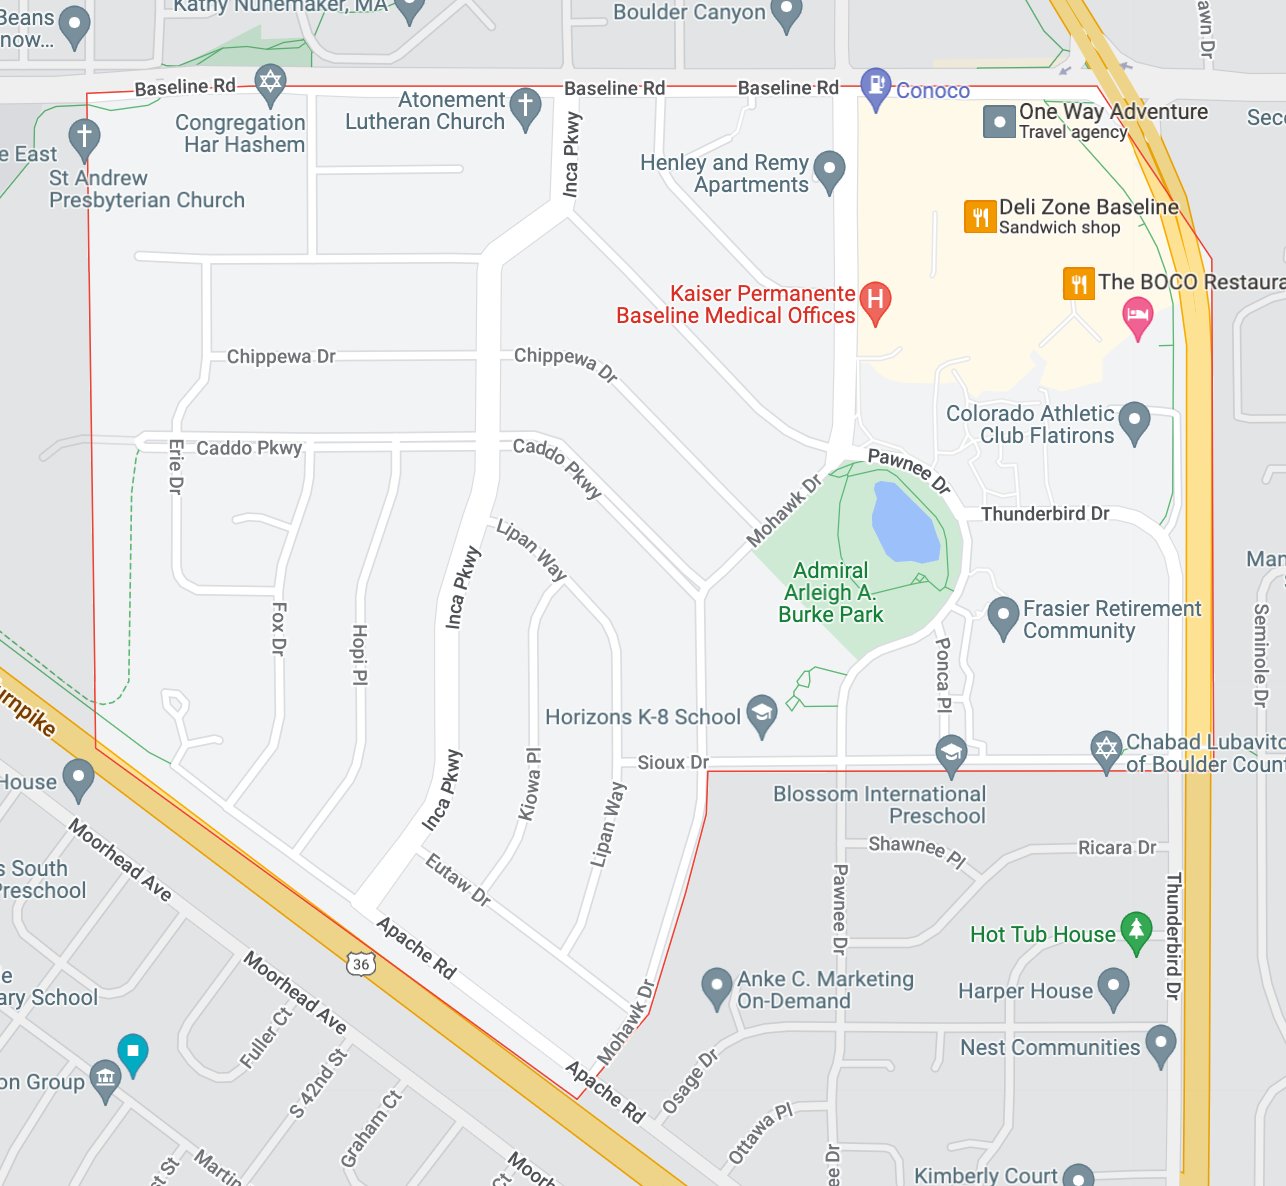 Map of Boulder, Colorado Frasier Meadows neighborhood